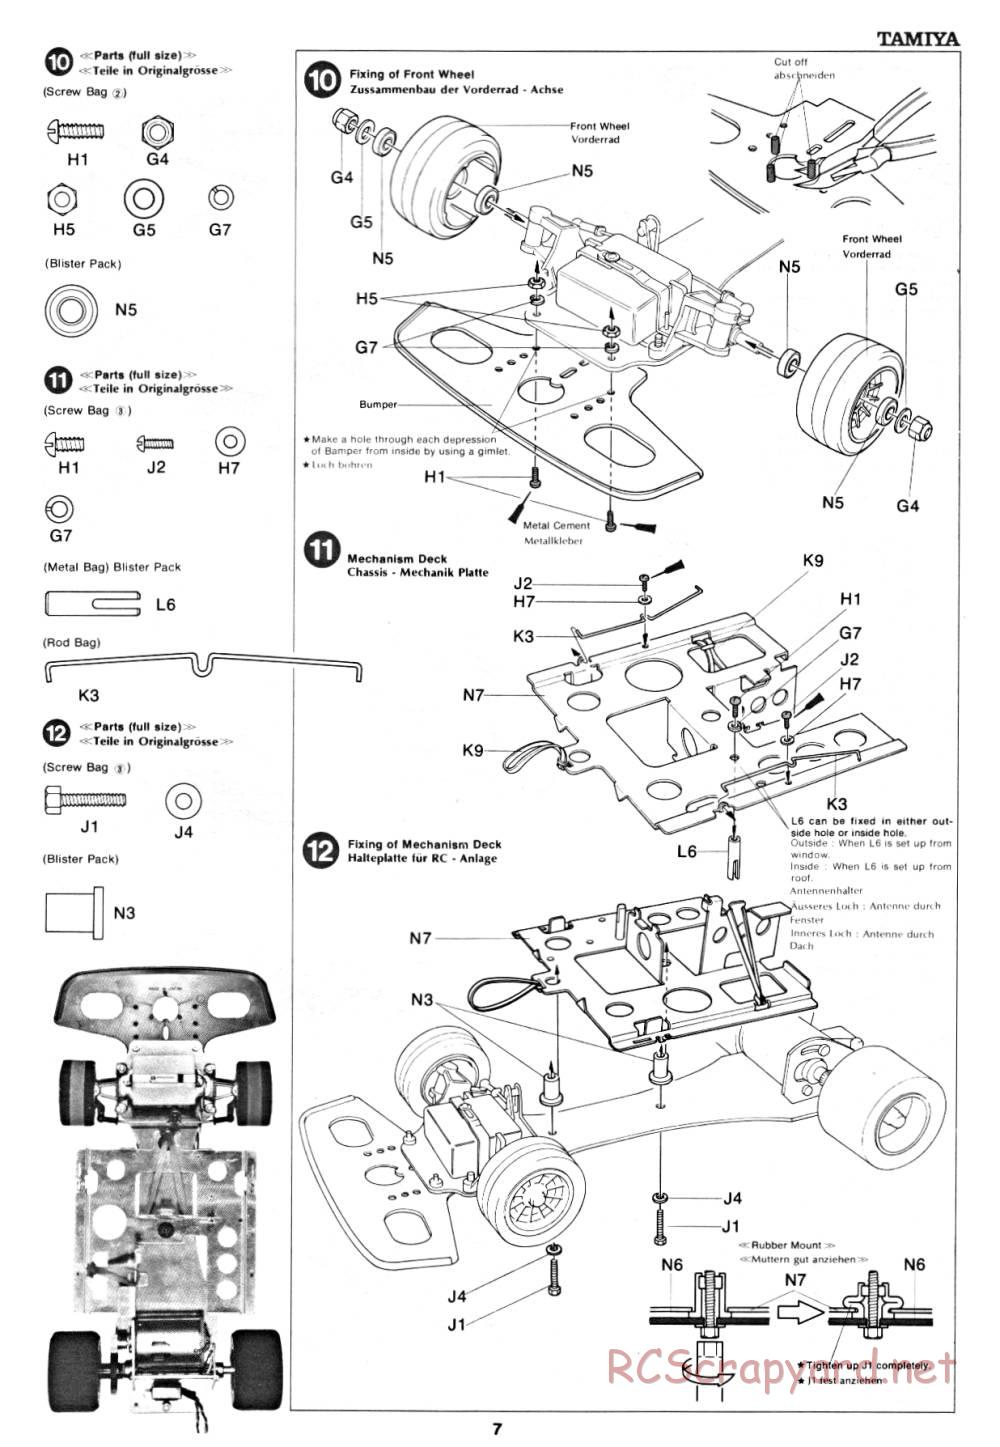 Tamiya - Toyota Celica LB Turbo Gr.5 (CS) - 58009 - Manual - Page 7